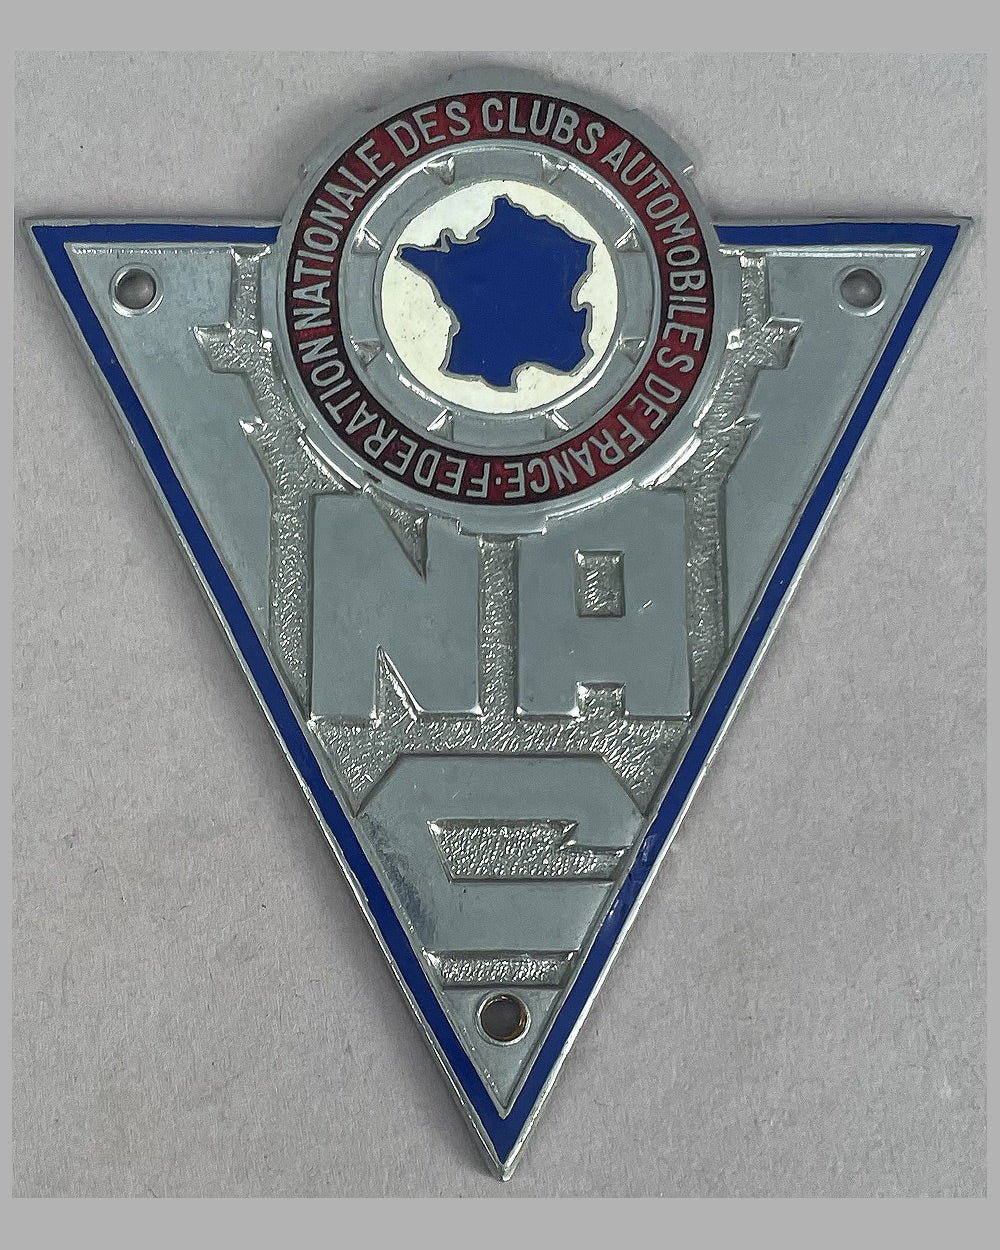 Federation Nationale des Clubs Automobiles de France triangular dash members badge